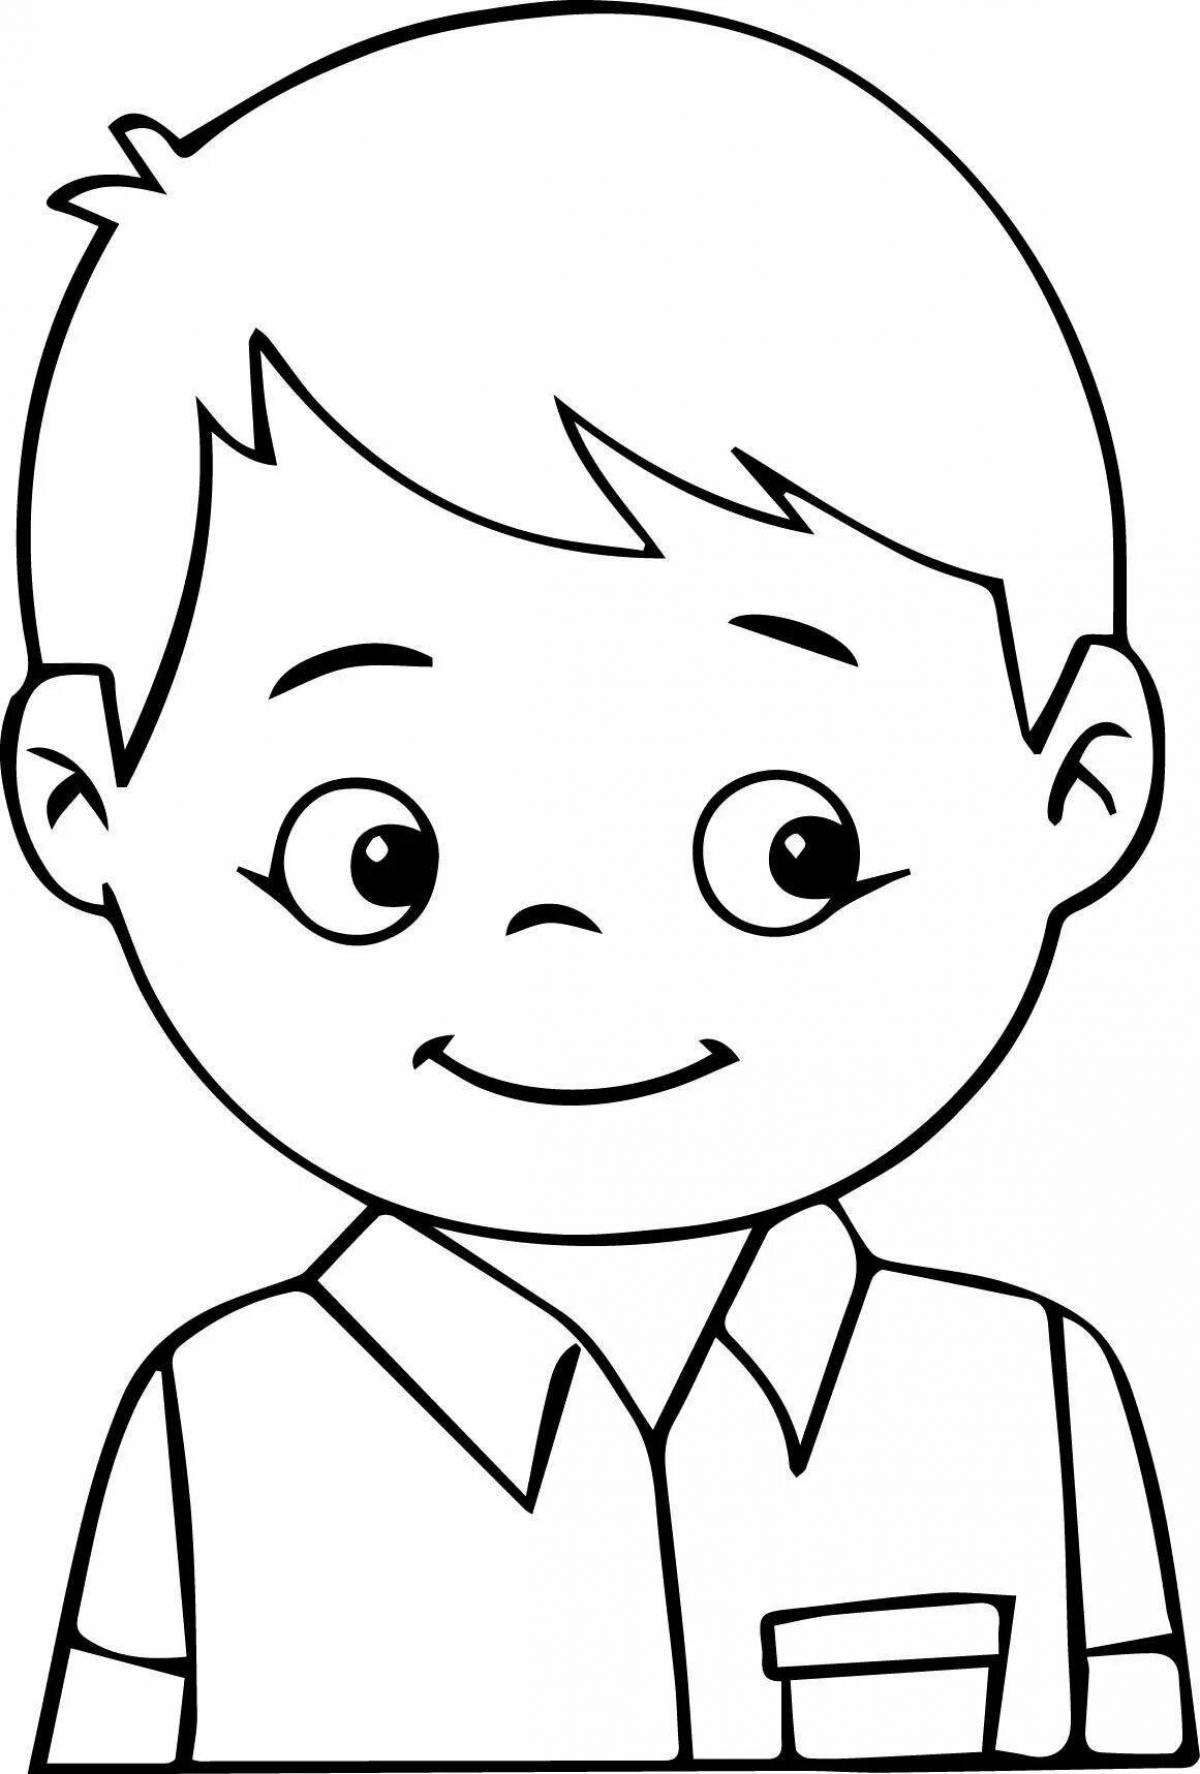 Fun coloring portrait for kids